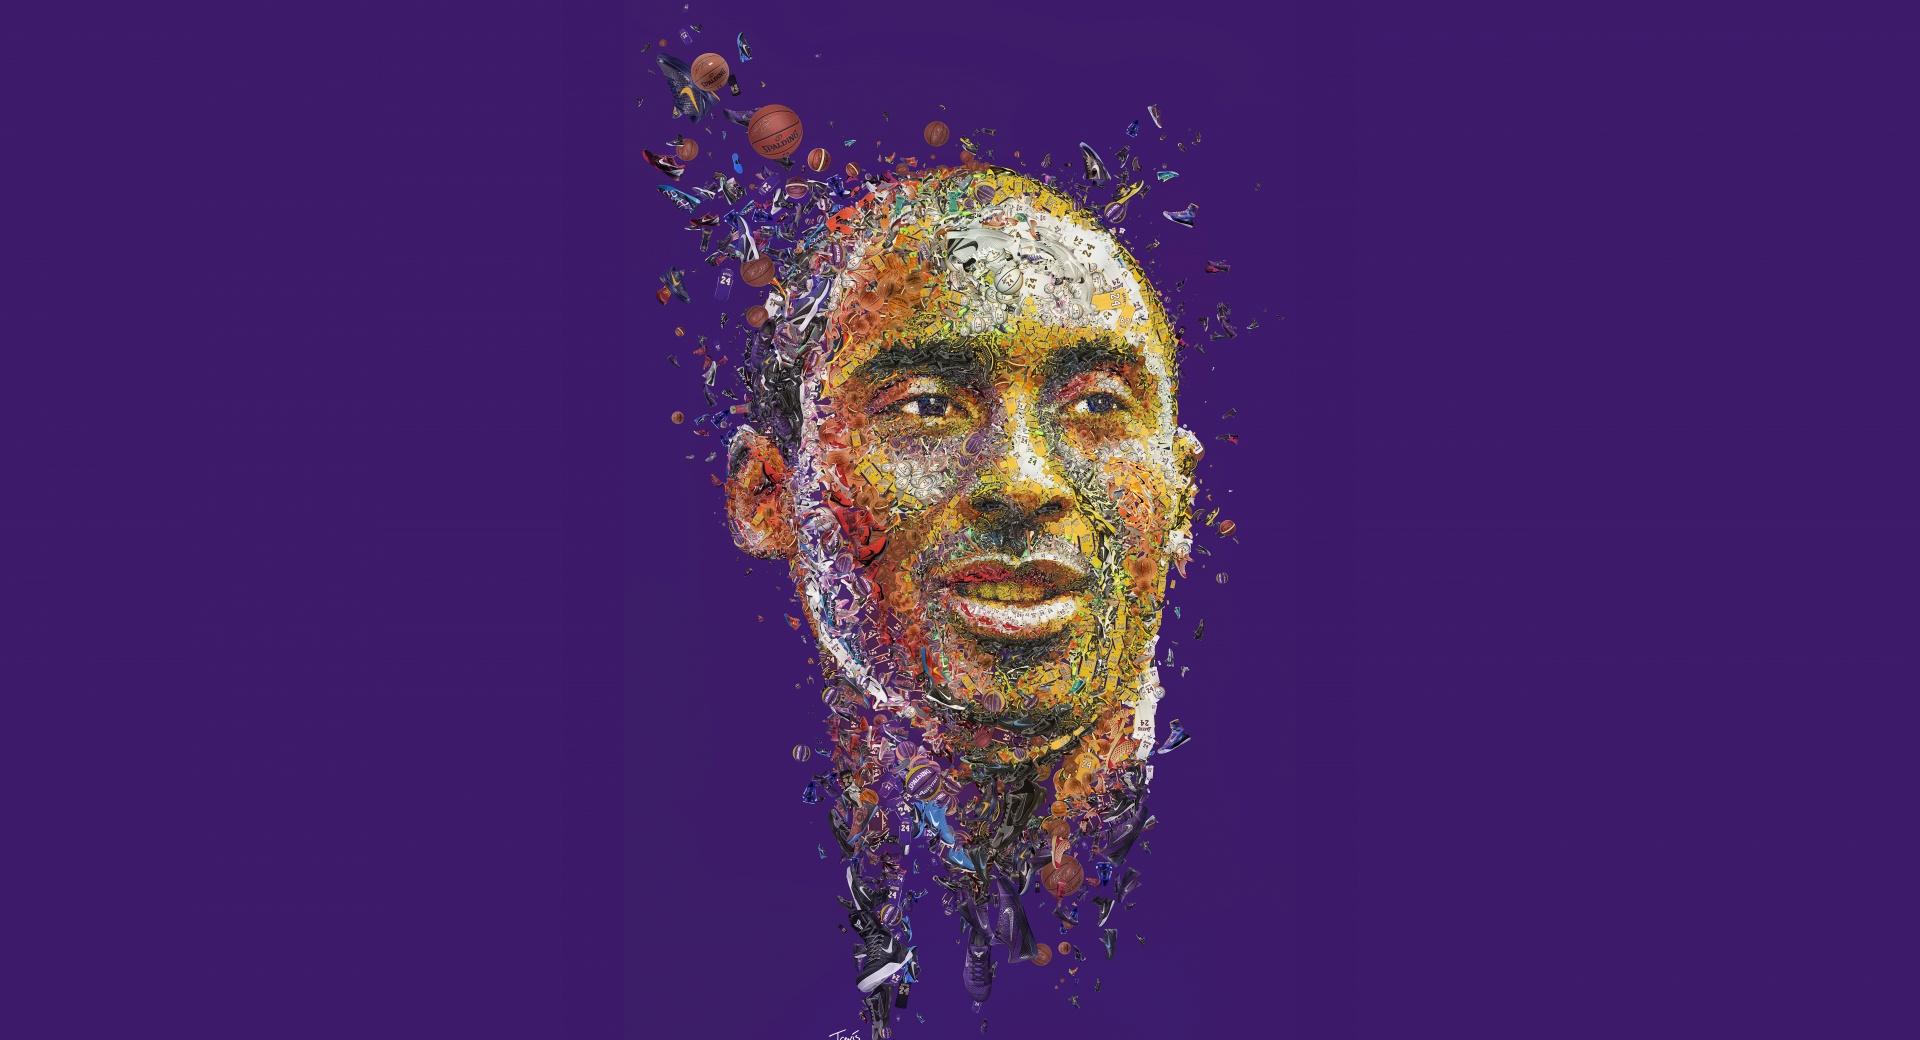 Kobe Bryant Portrait at 1024 x 1024 iPad size wallpapers HD quality